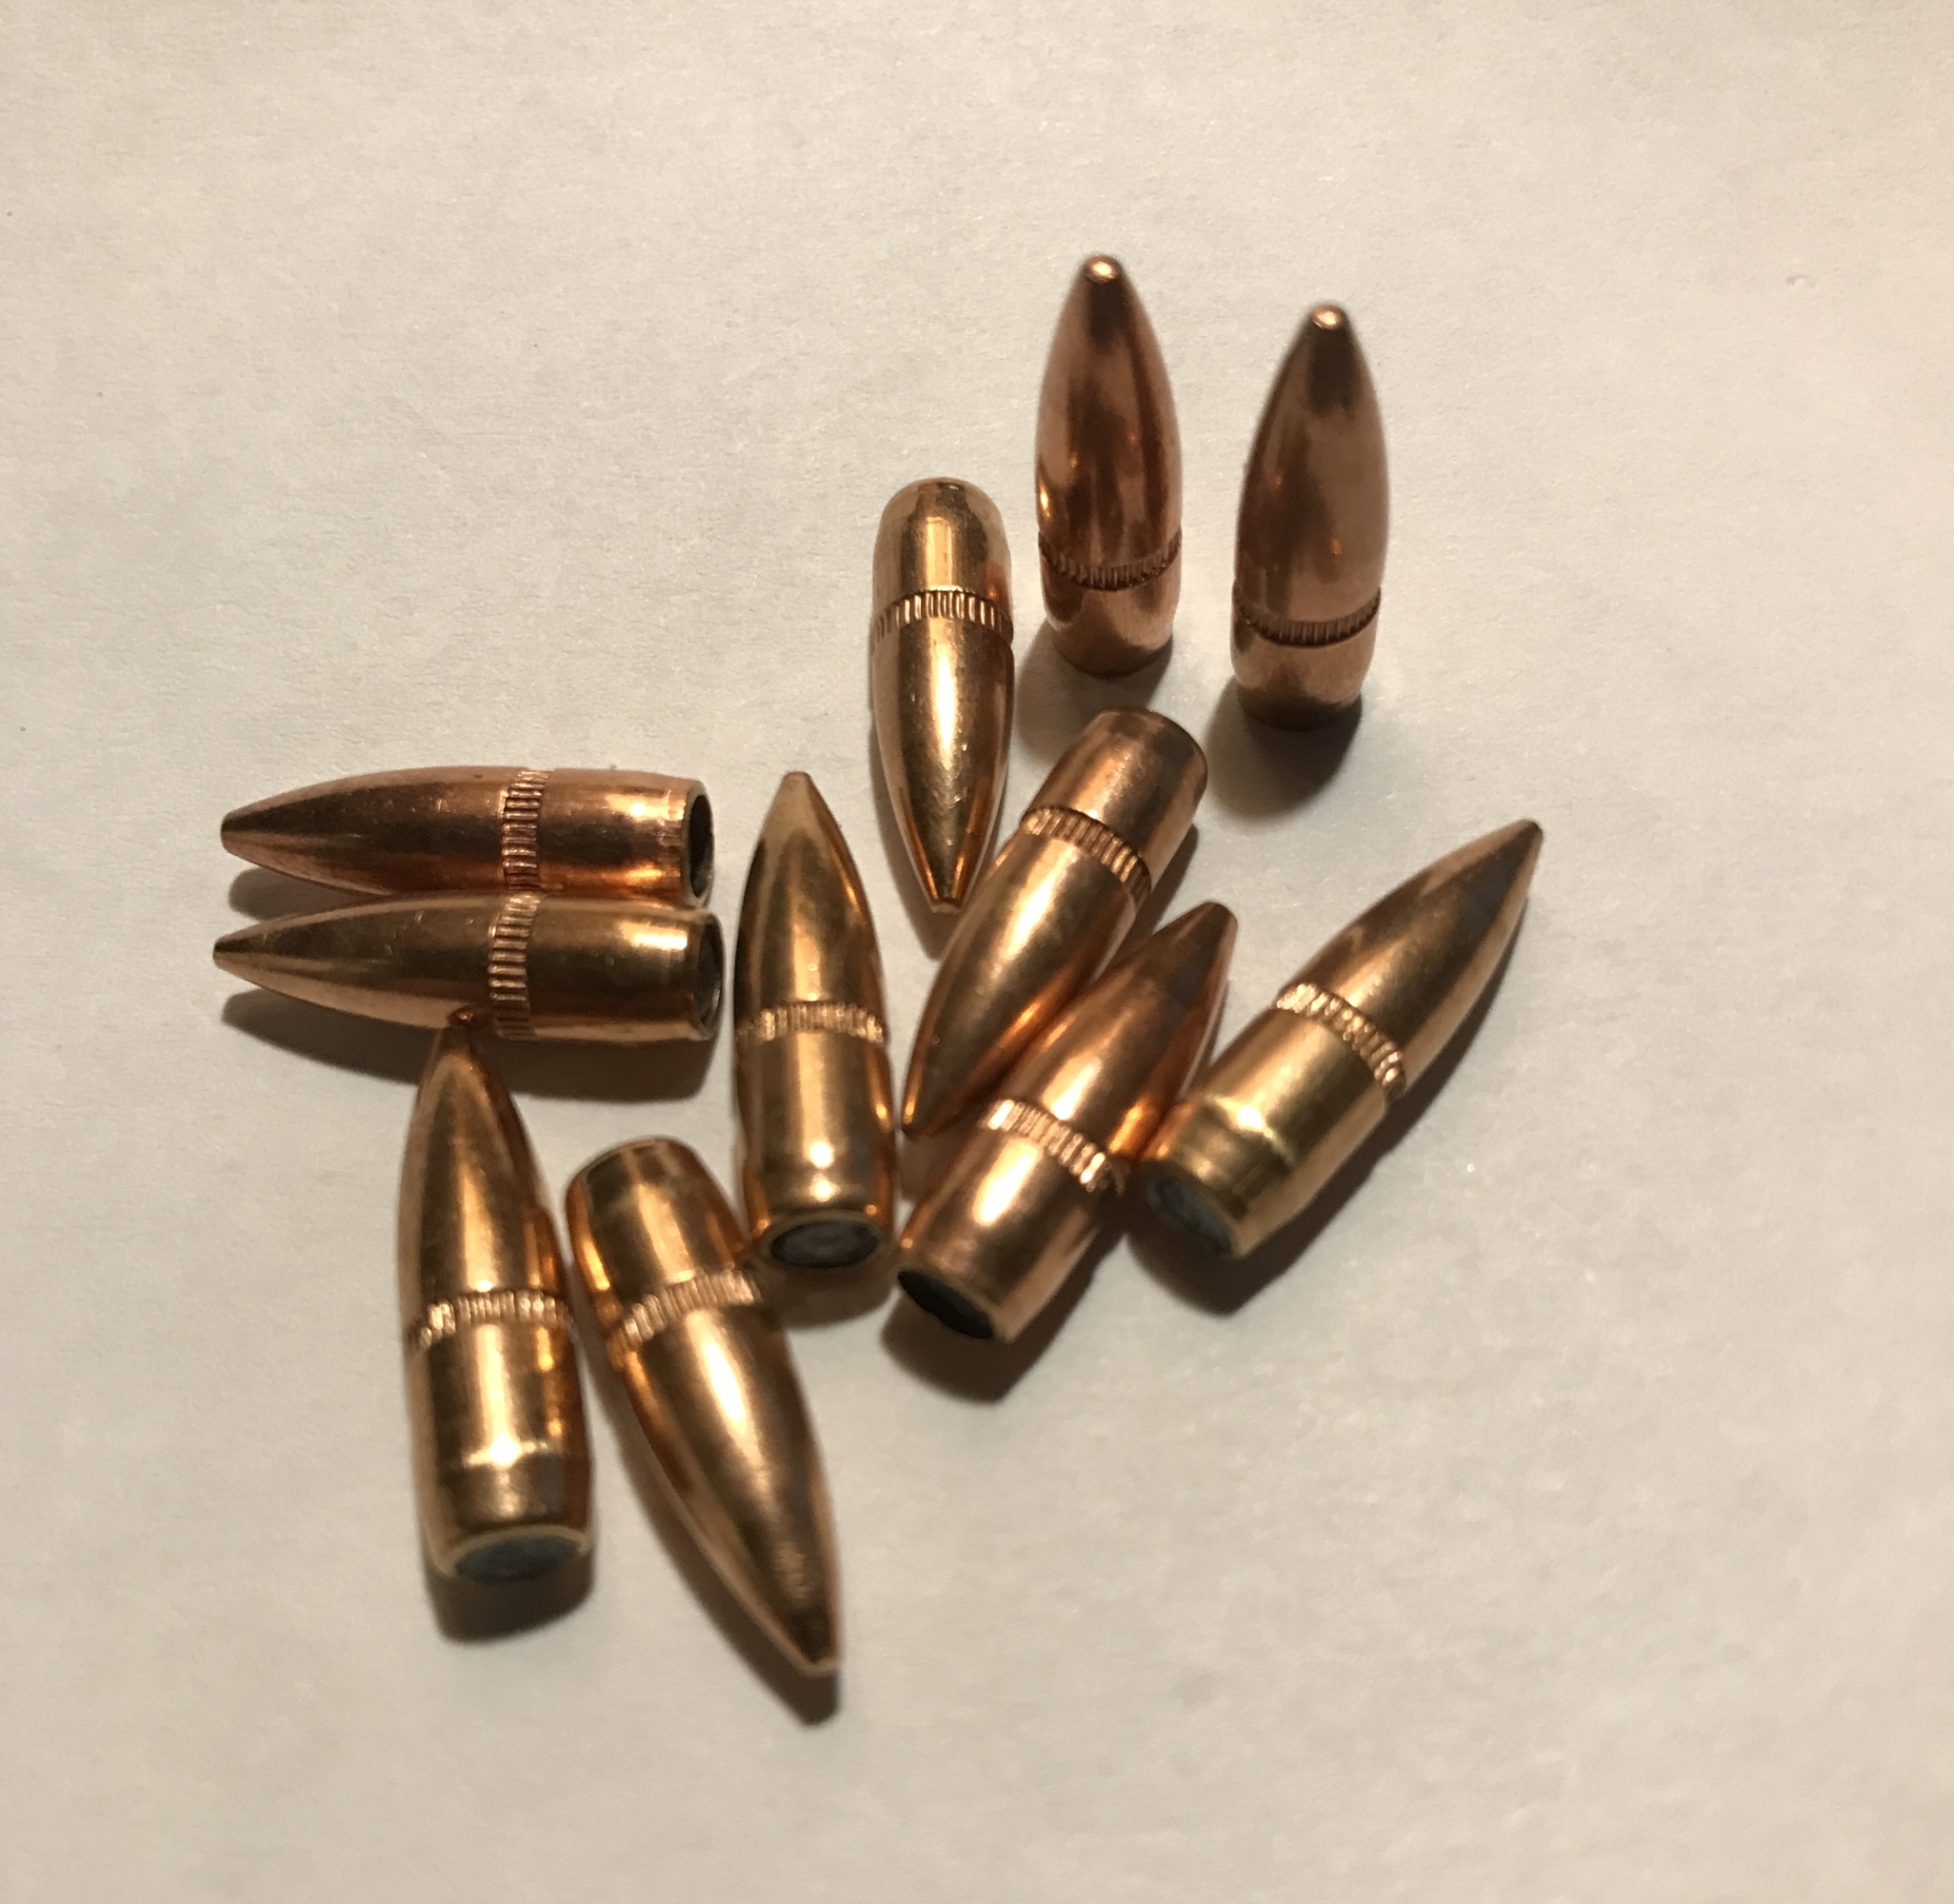 Bullets 223 Remington 5.56mm Full Metal Jacket